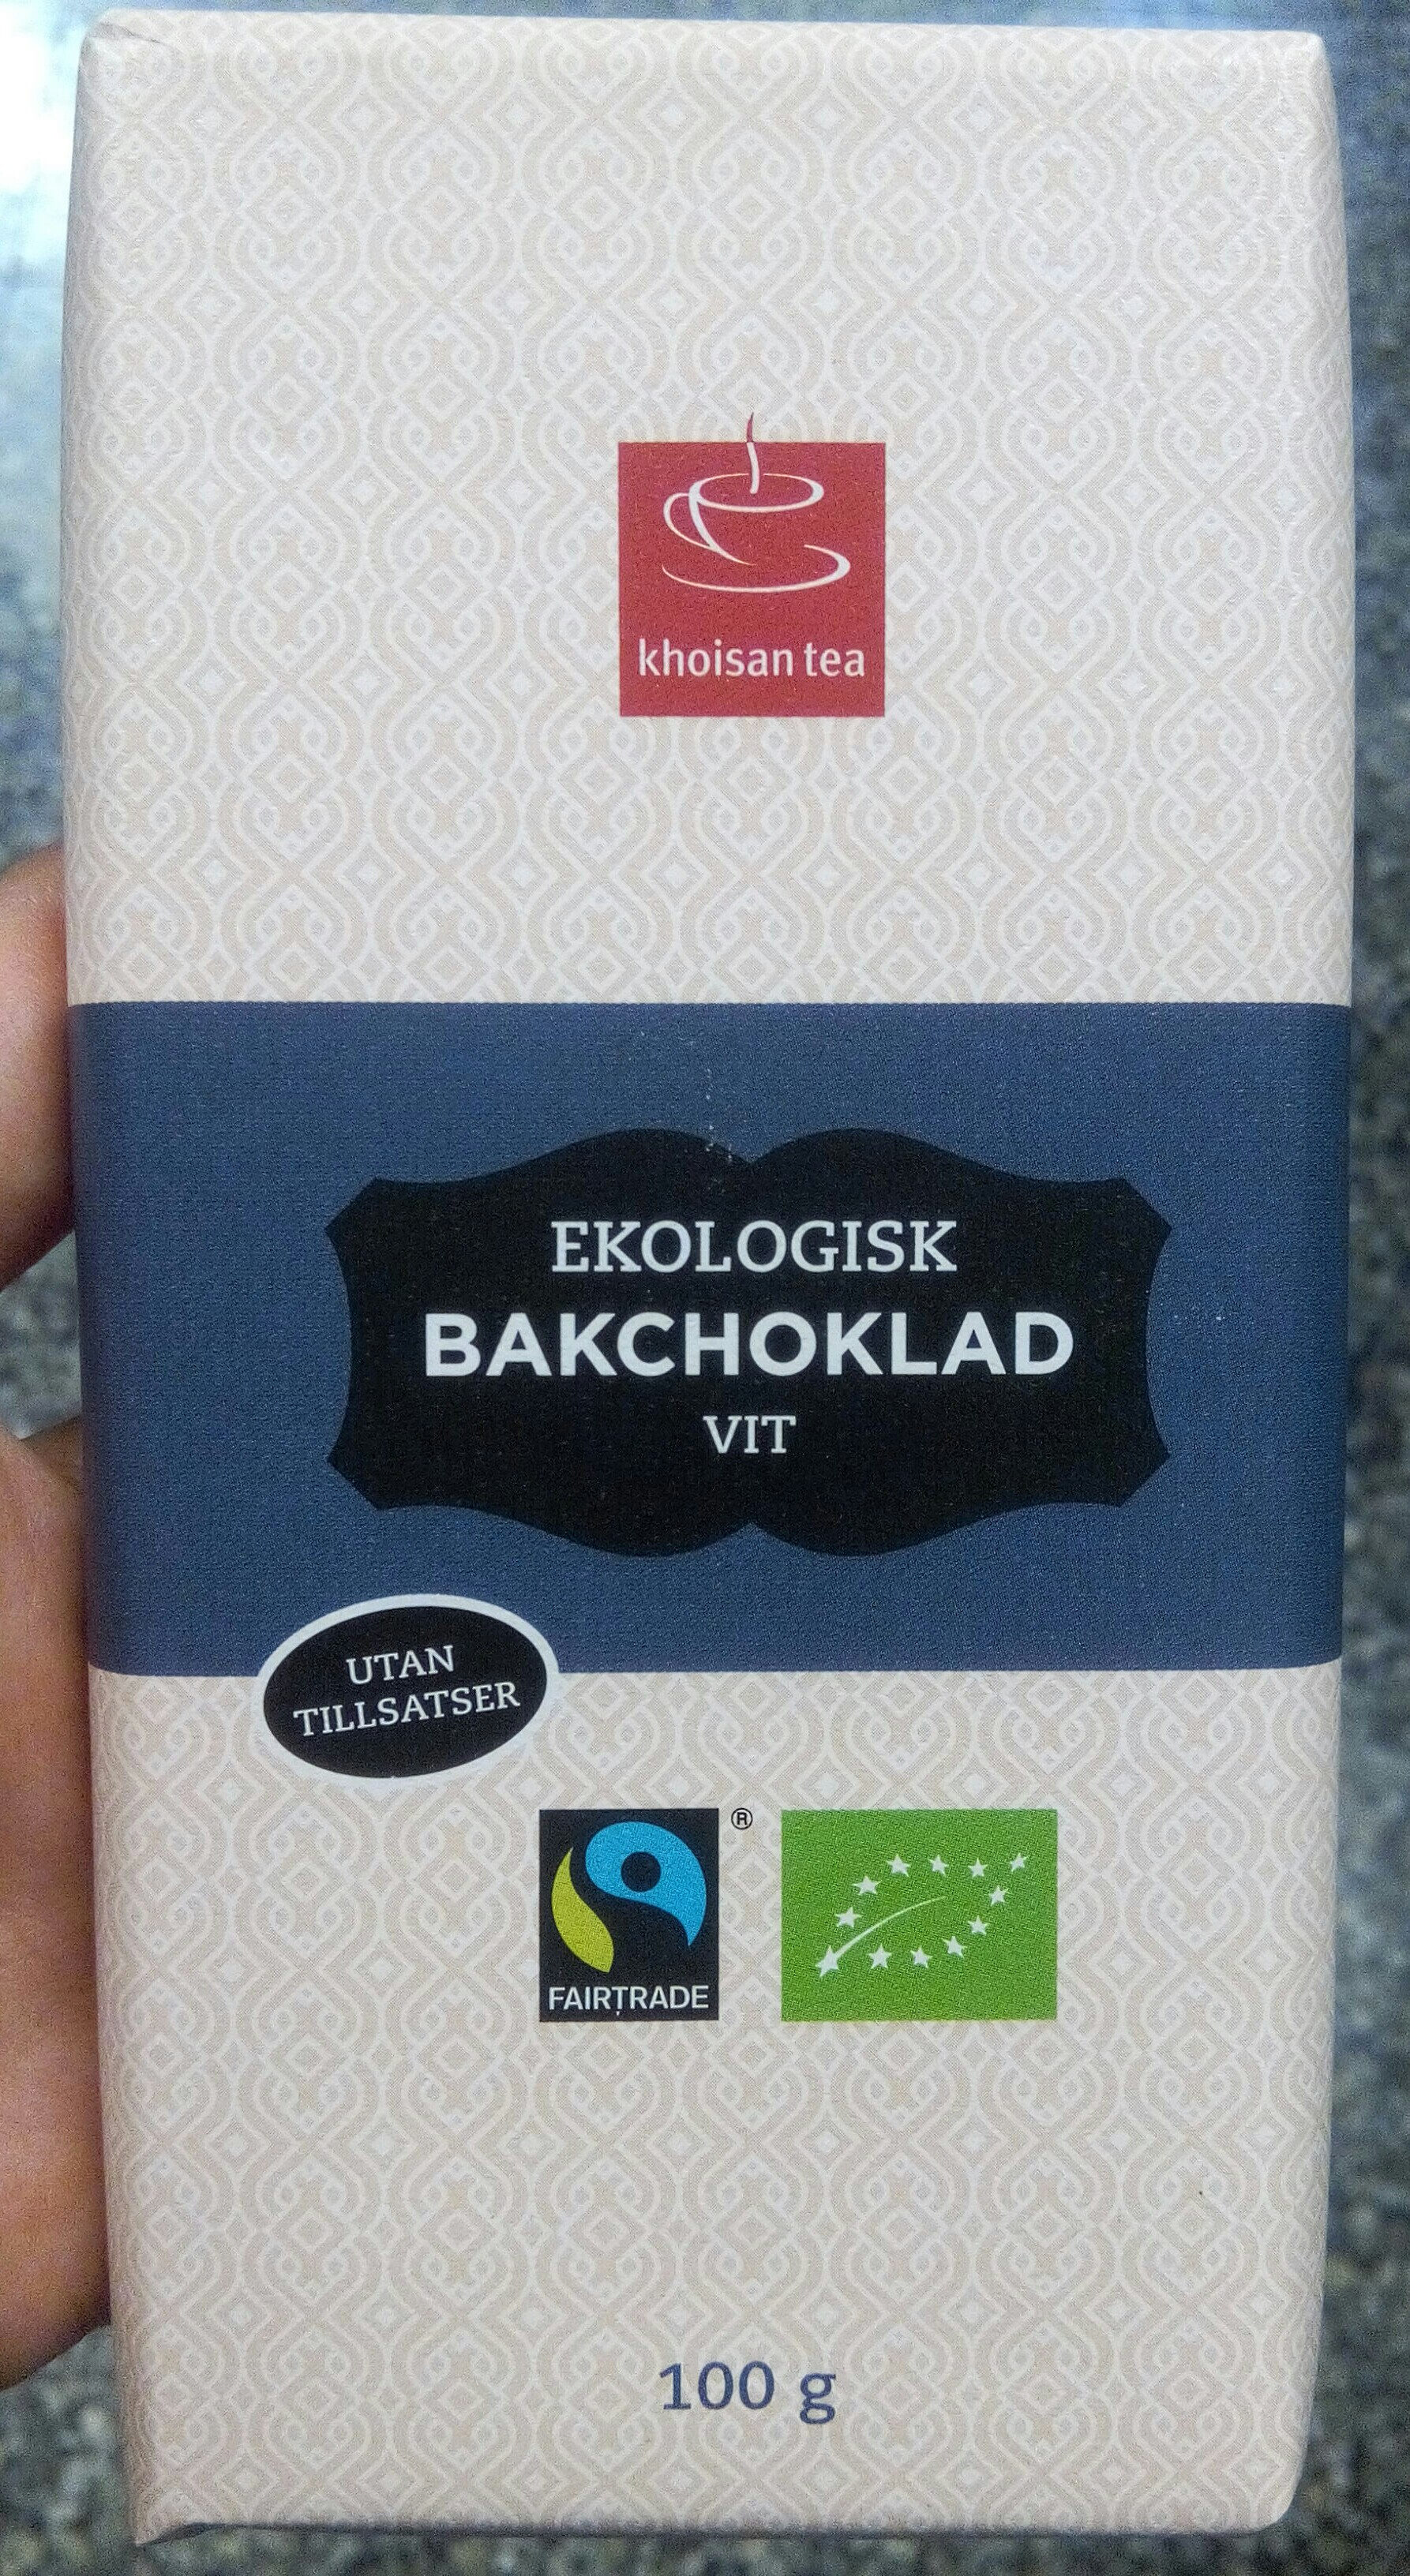 Ekologisk bakchoklad vit - Produkt - sv